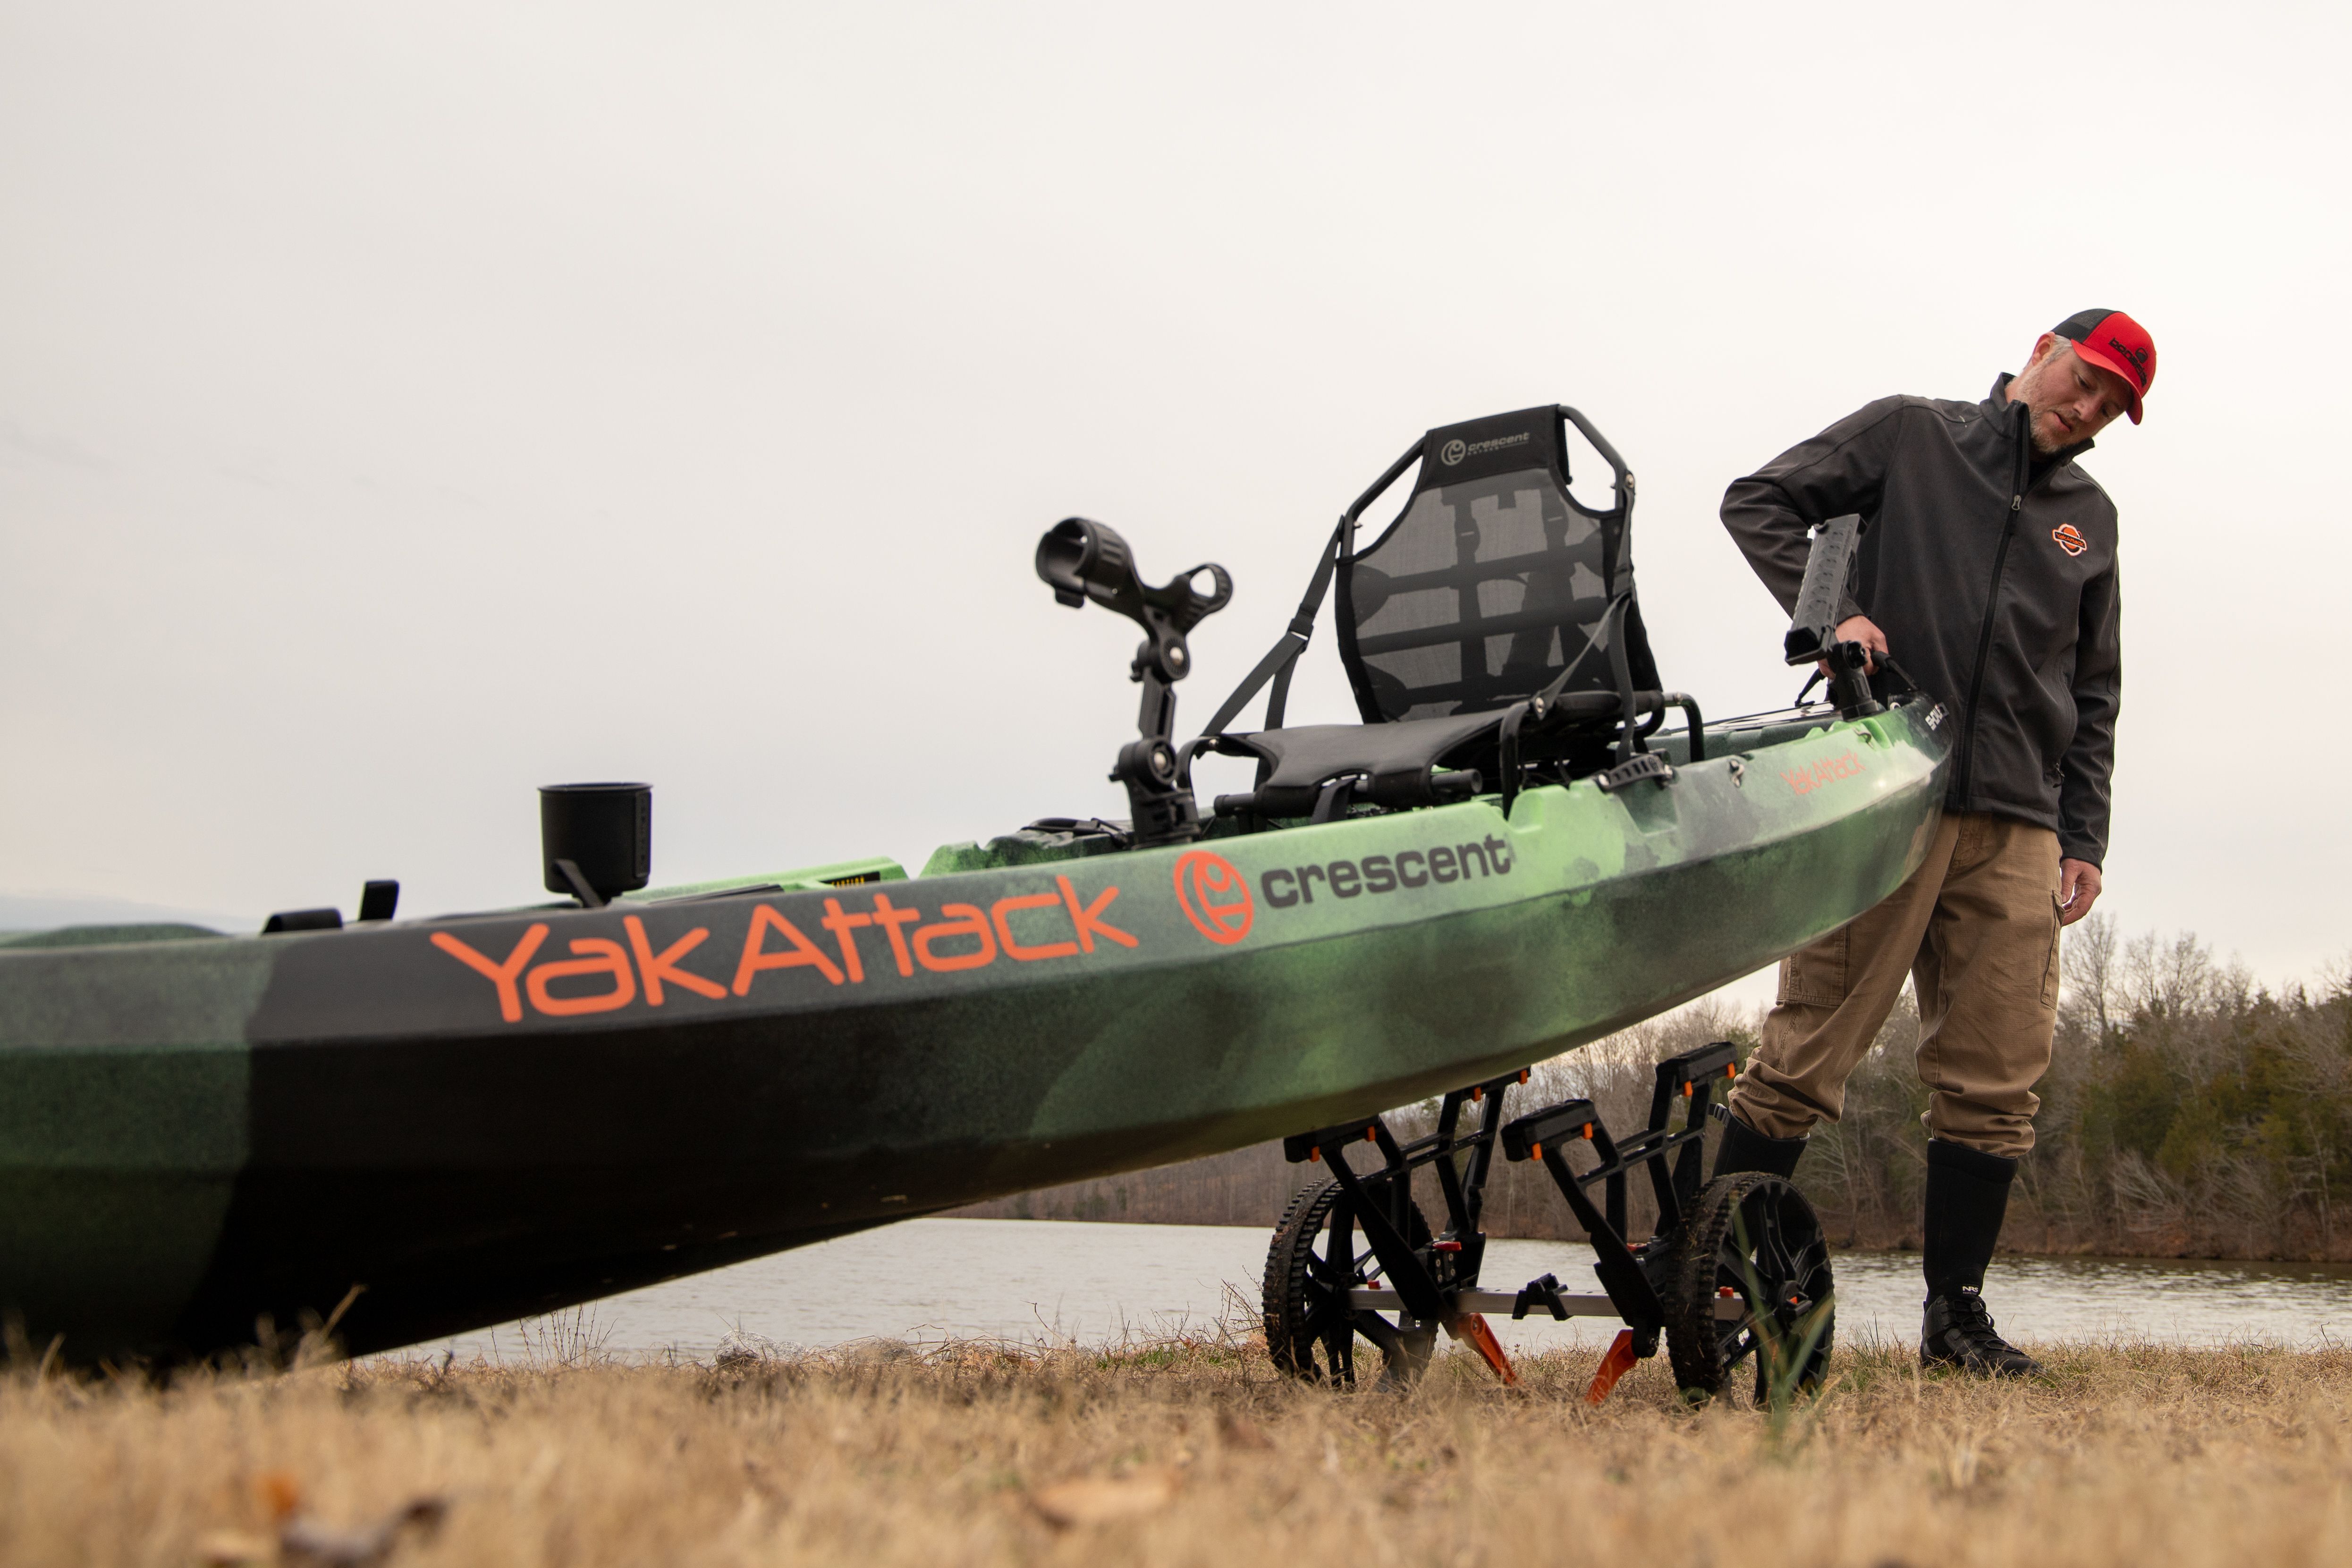 YakAttack TowNStow Bunkster kayak cart with Crescent Shoalie SF